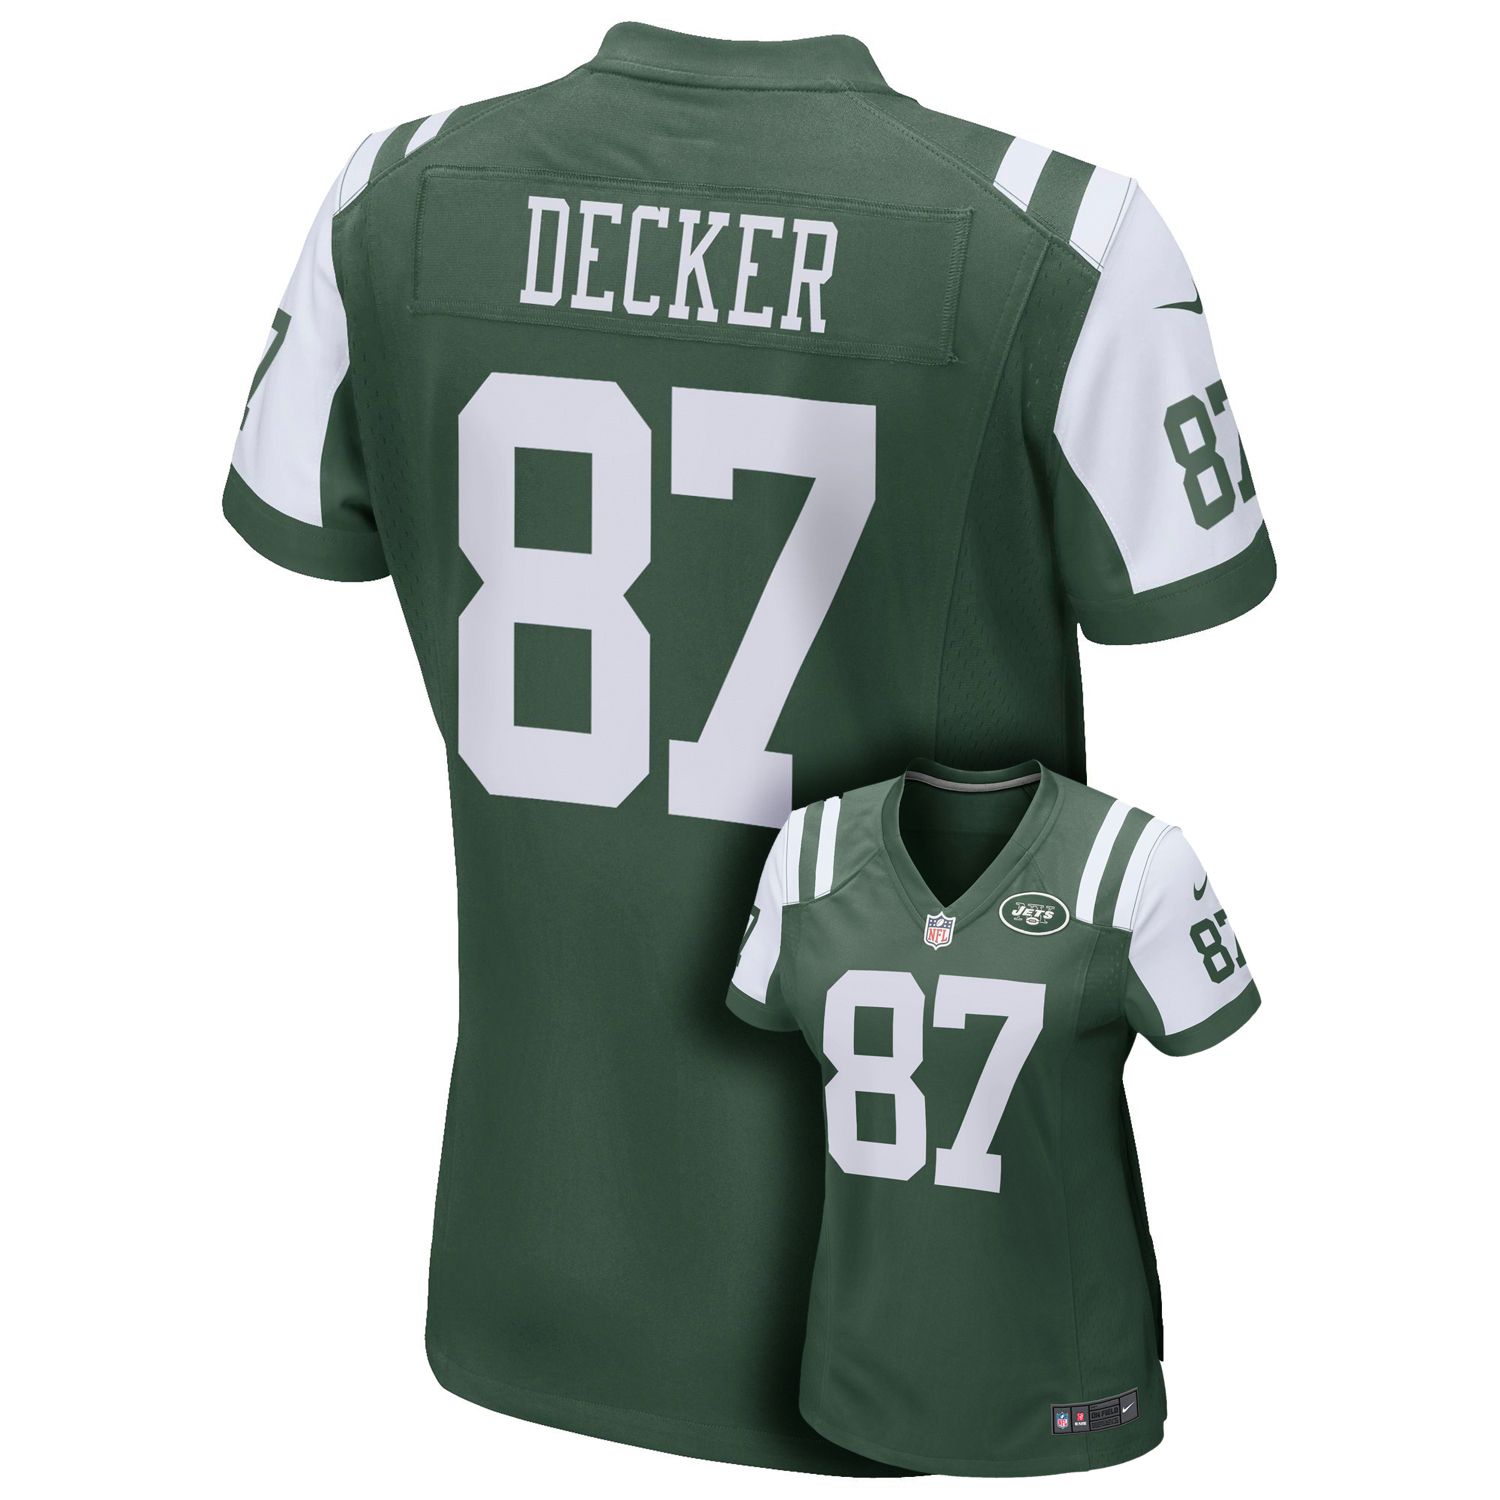 Eric Decker Game NFL Replica Jersey